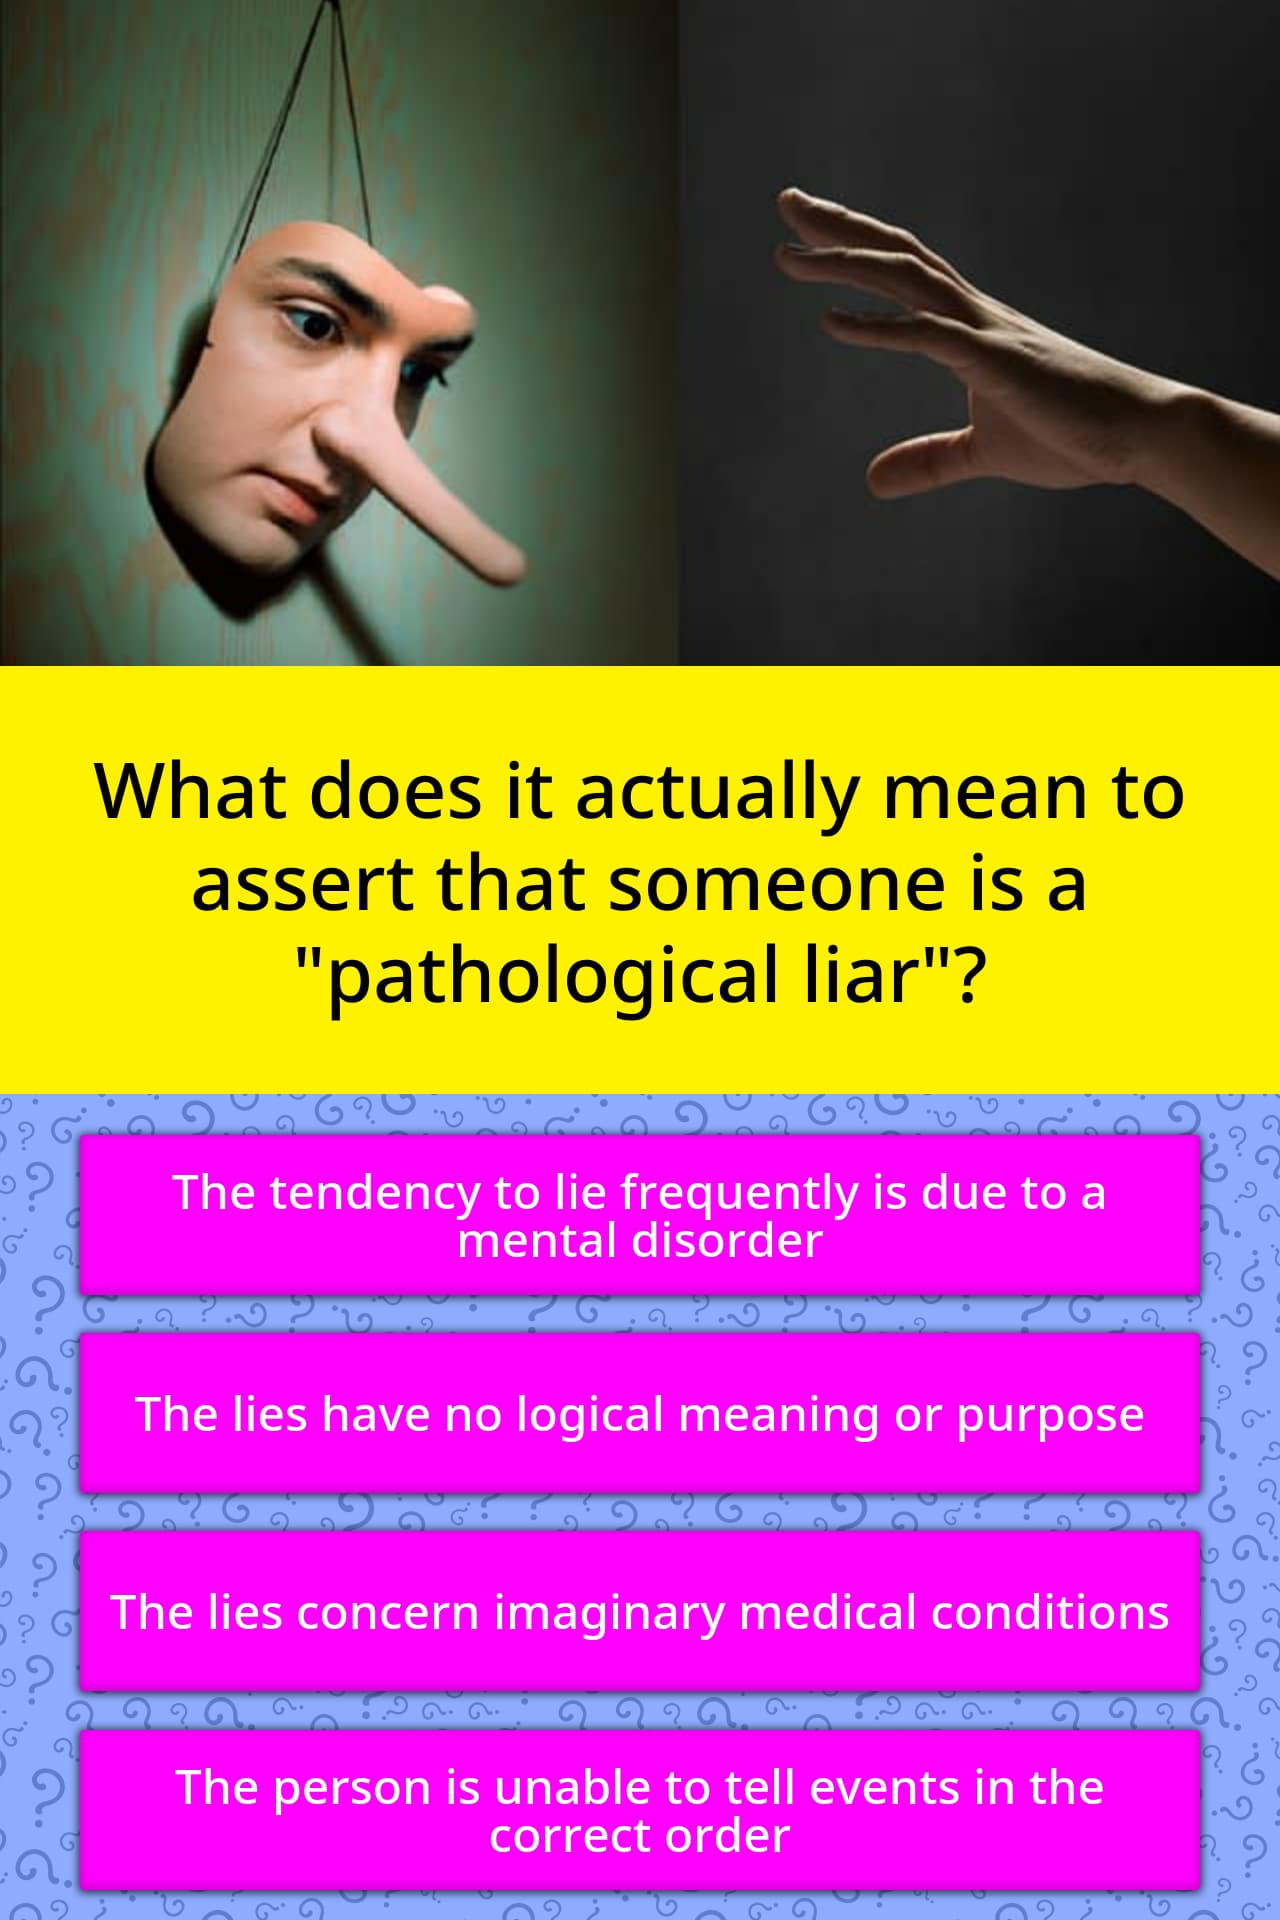 What makes a pathological liar